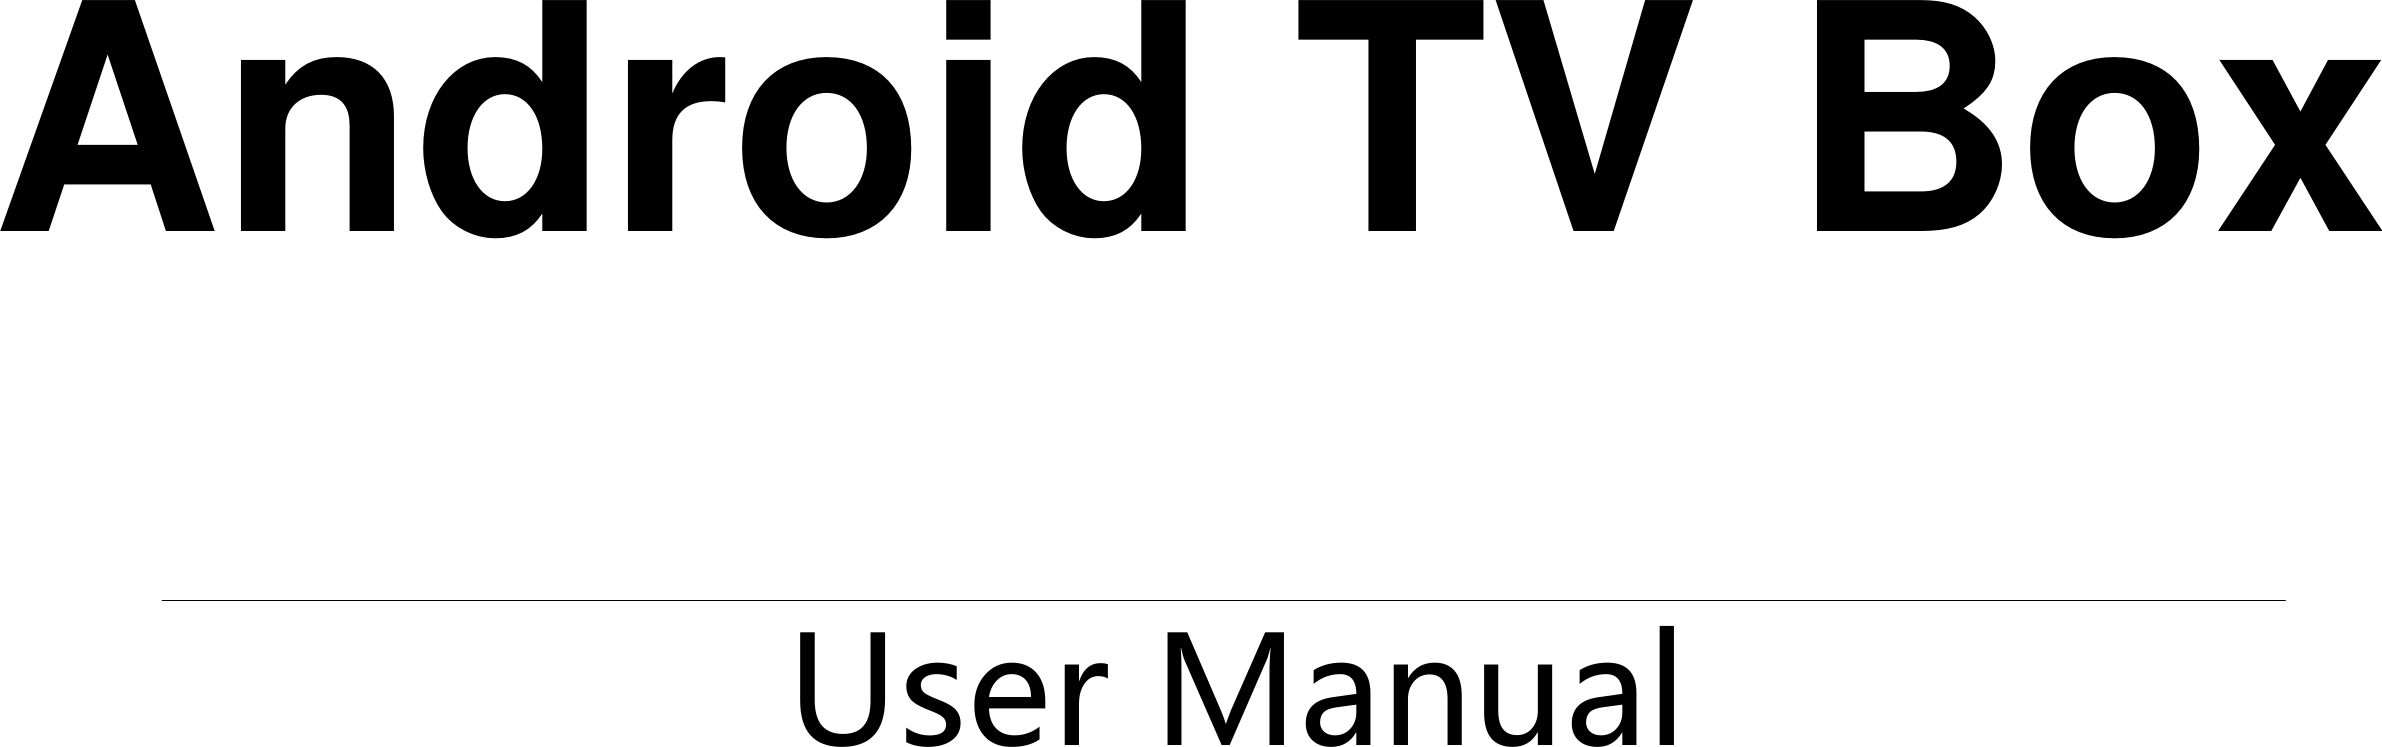                               Android TV Box User Manual 